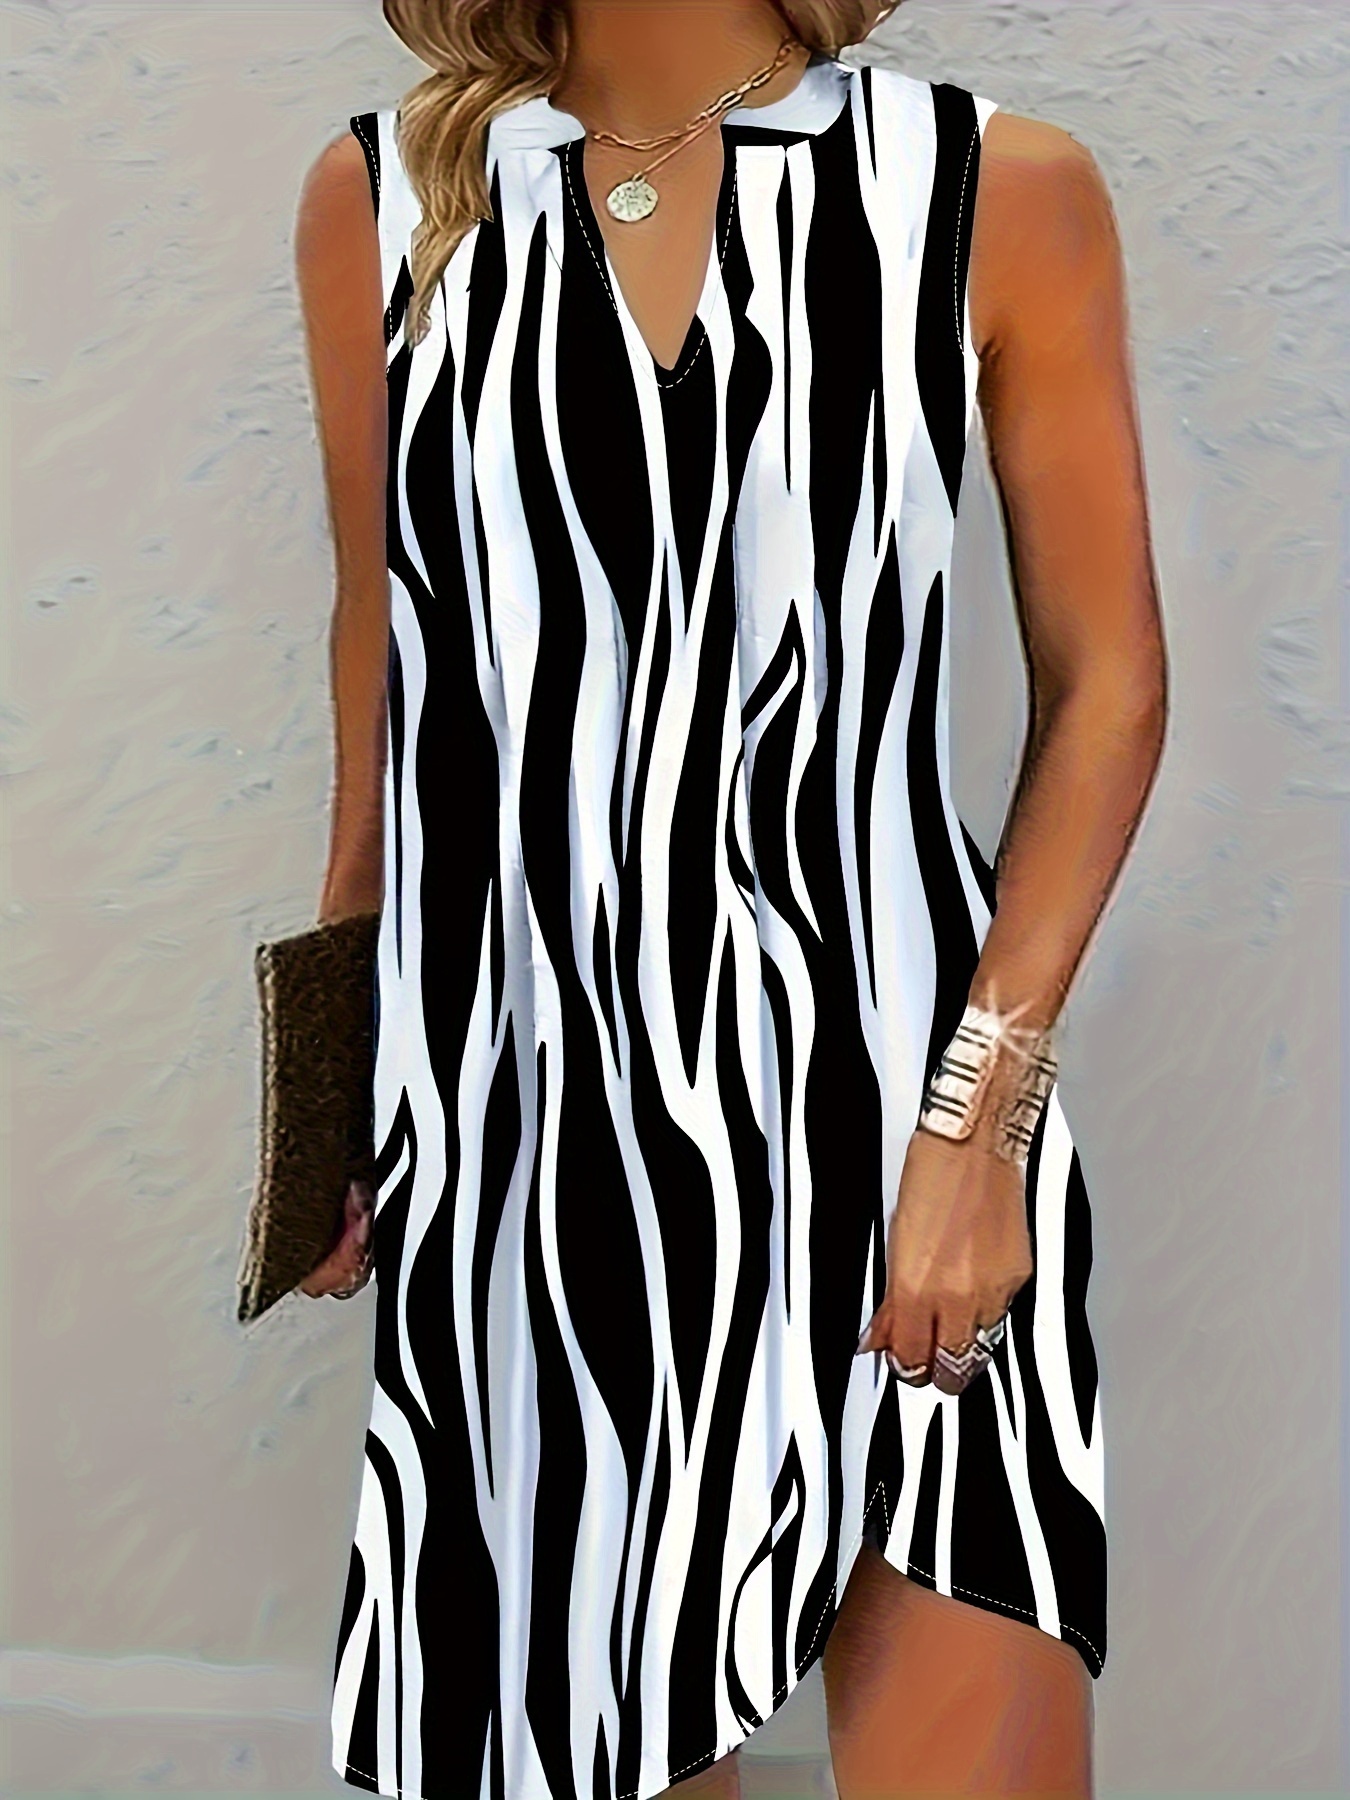 abstract ripple print dress casual v neck sleeveless dress womens clothing details 45